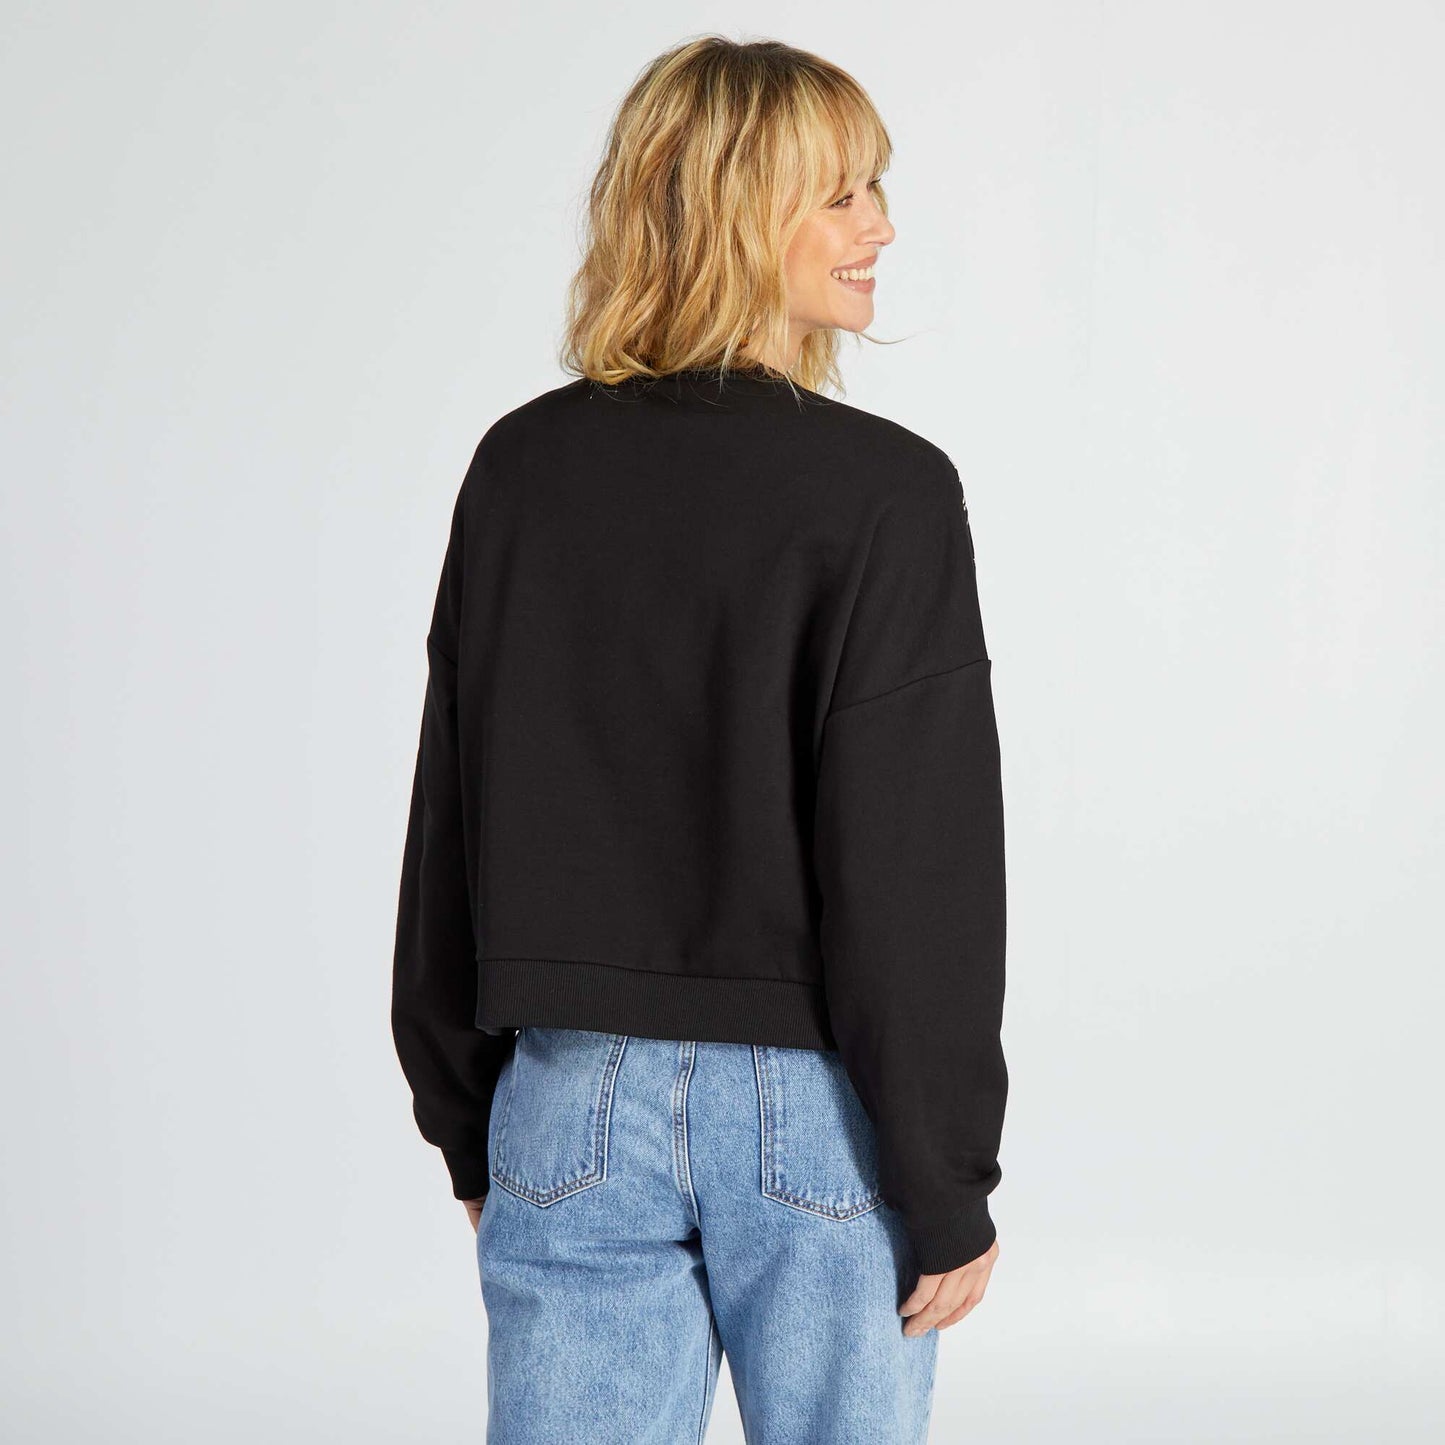 Embroidered sweatshirt black